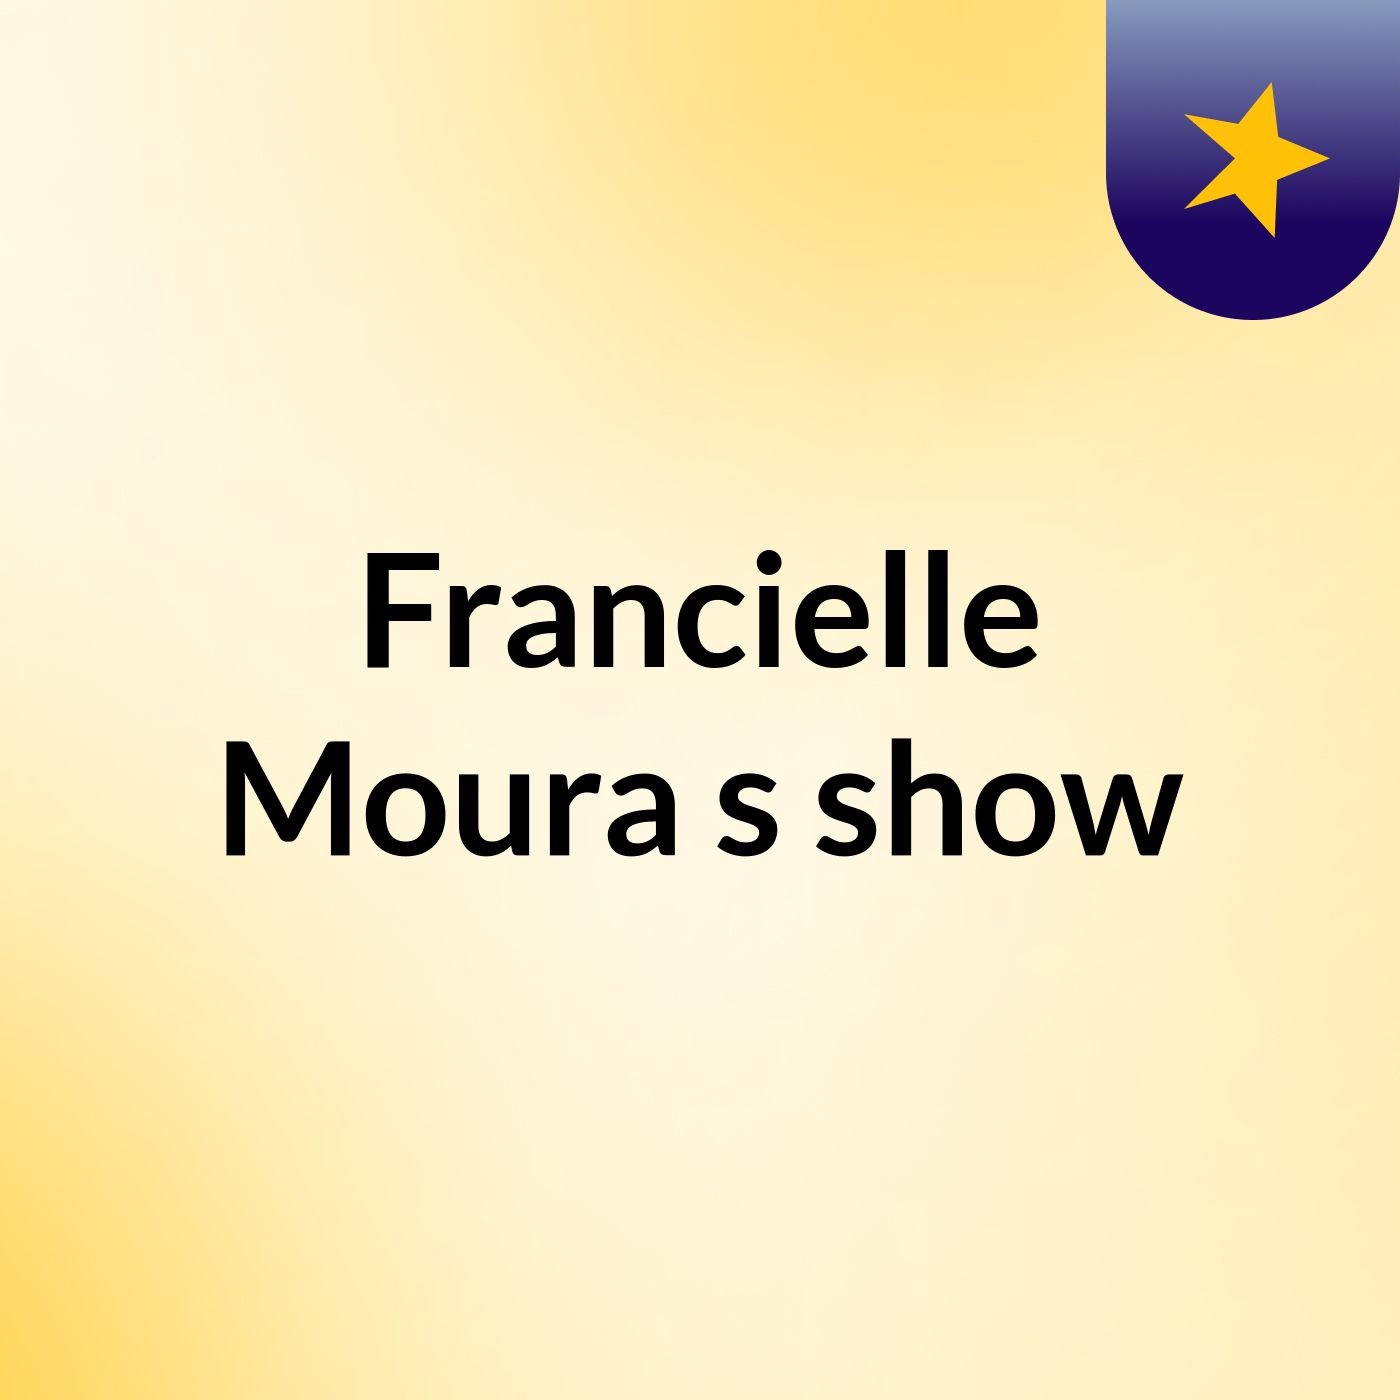 Francielle Moura's show